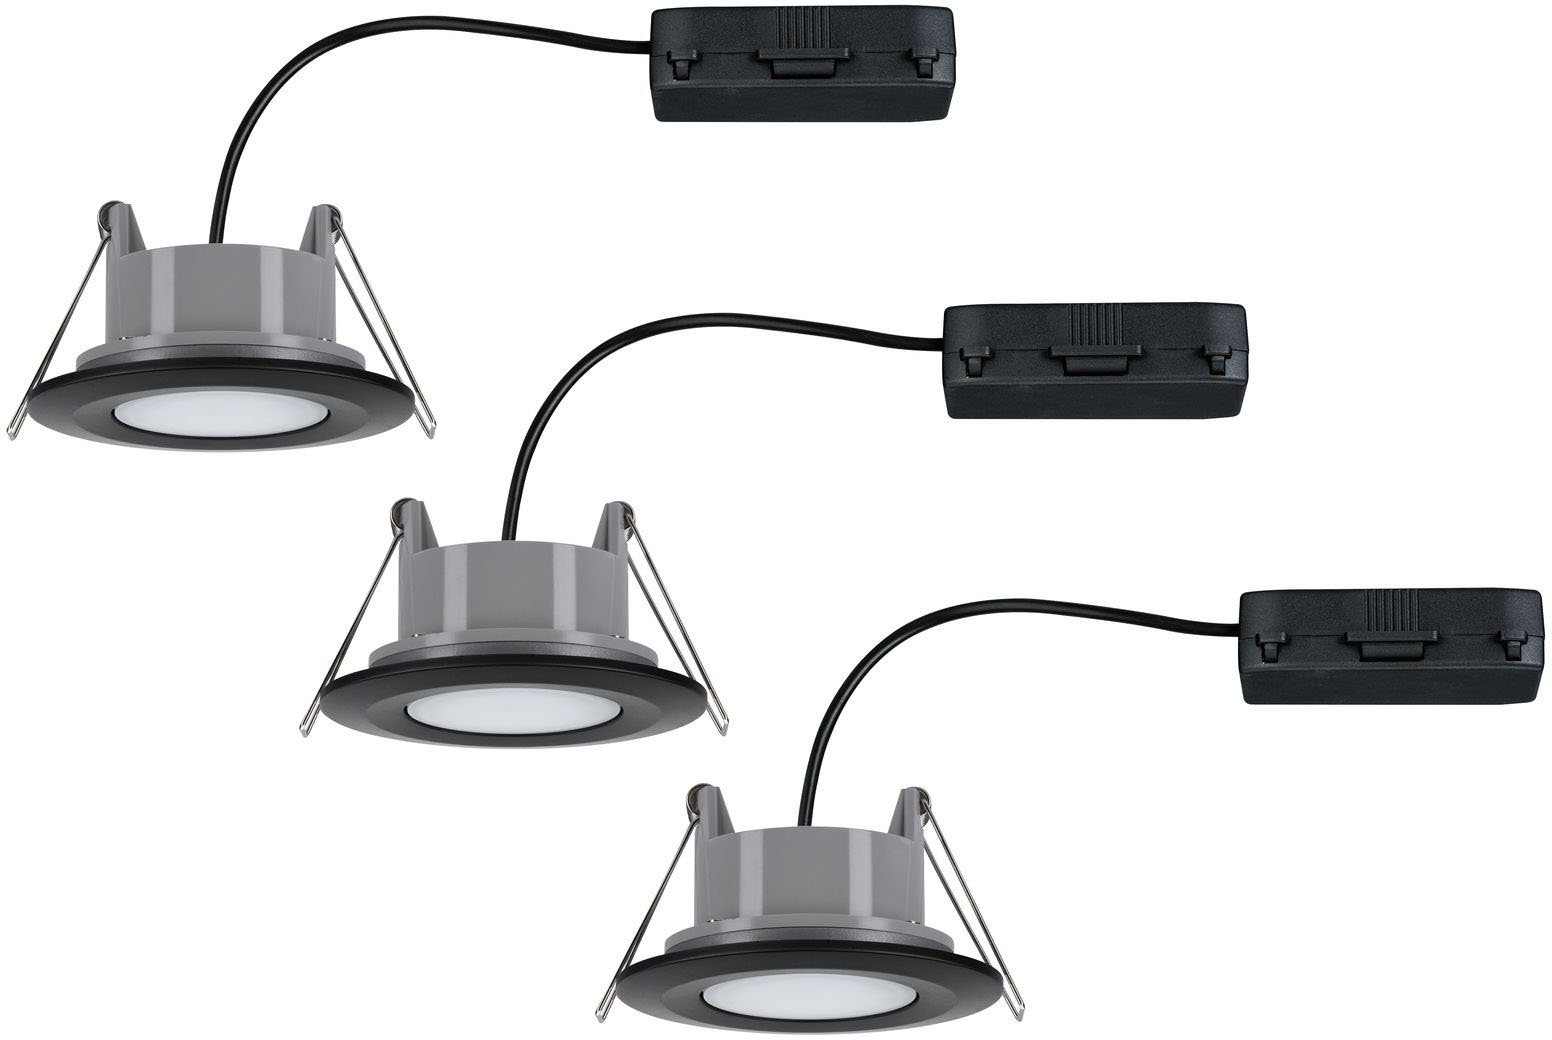 Paulmann LED Einbauleuchte Calla, LED Deckenmontage Neutralweiß, integriert, LED-Modul, fest